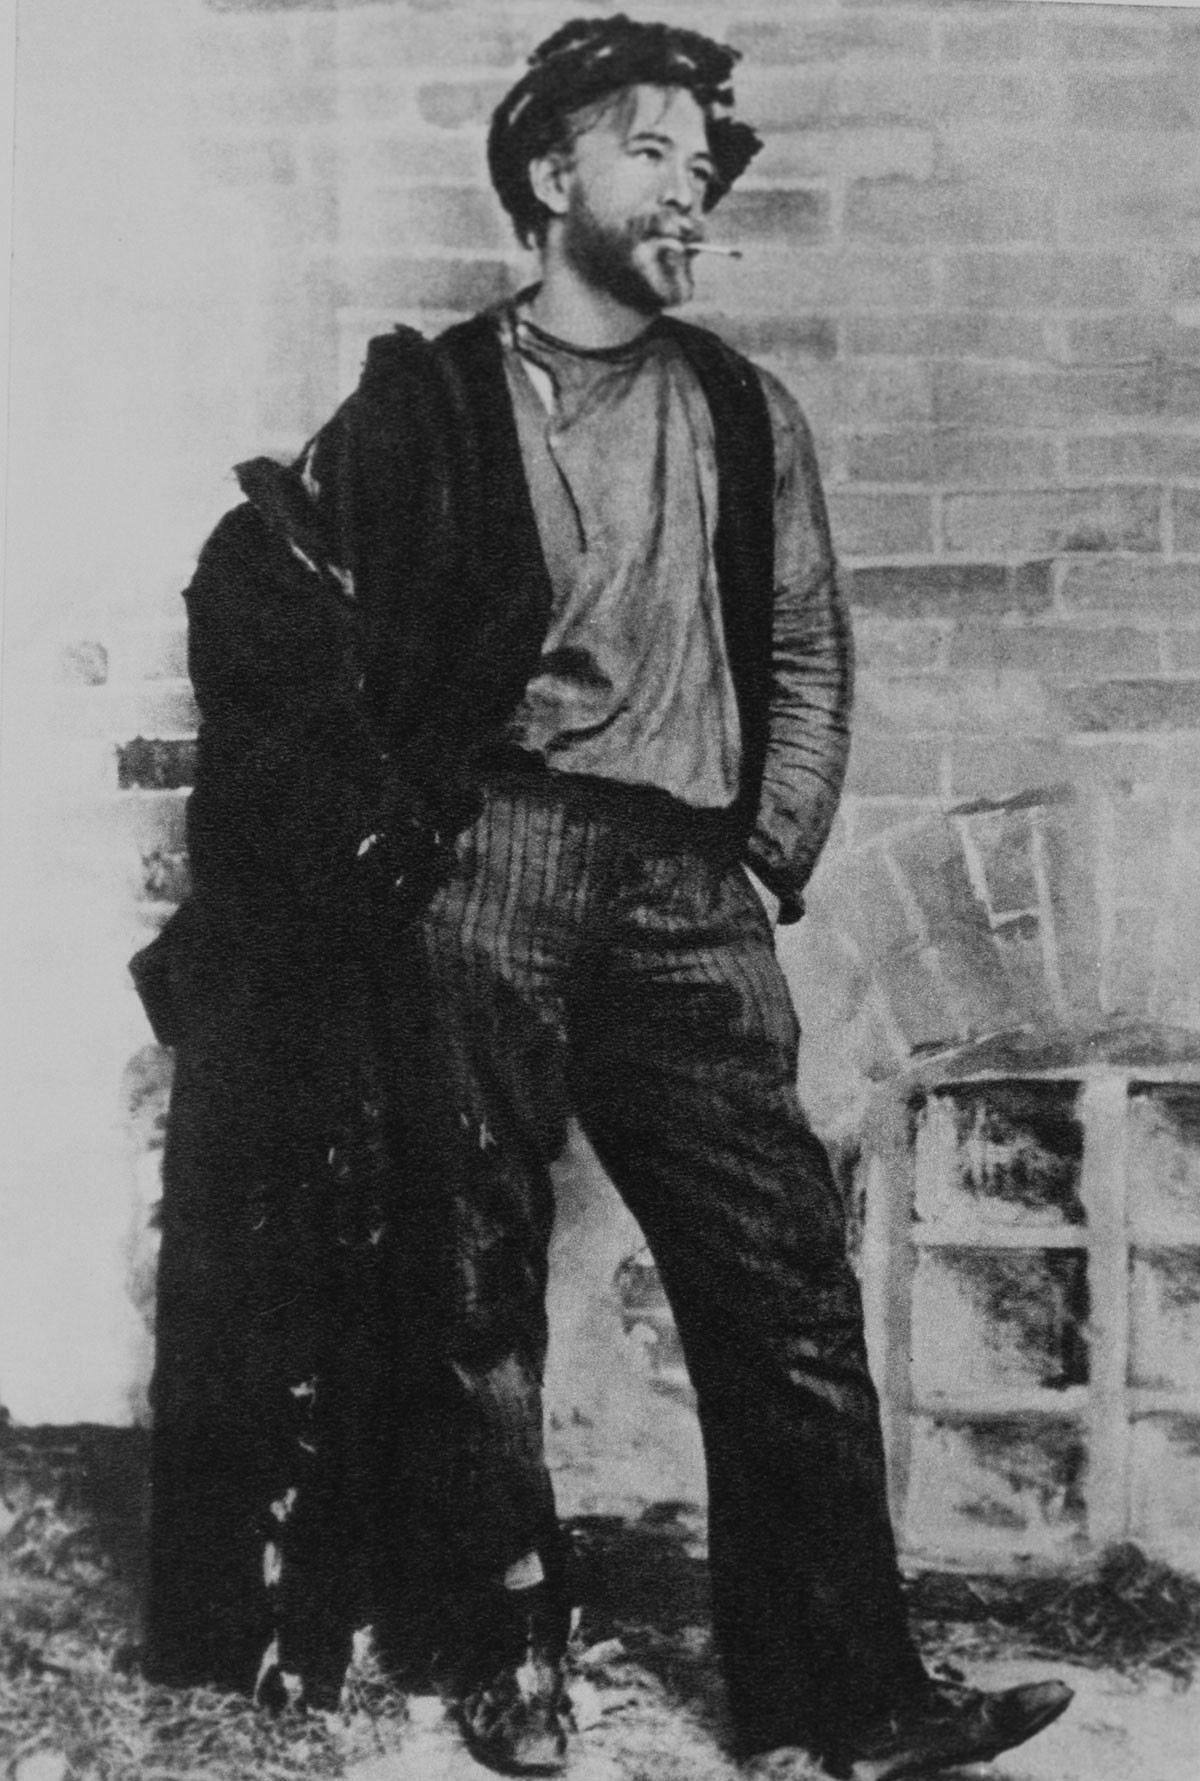 Konstantin Stanislavsky as Satin in 'Lower Depths'.